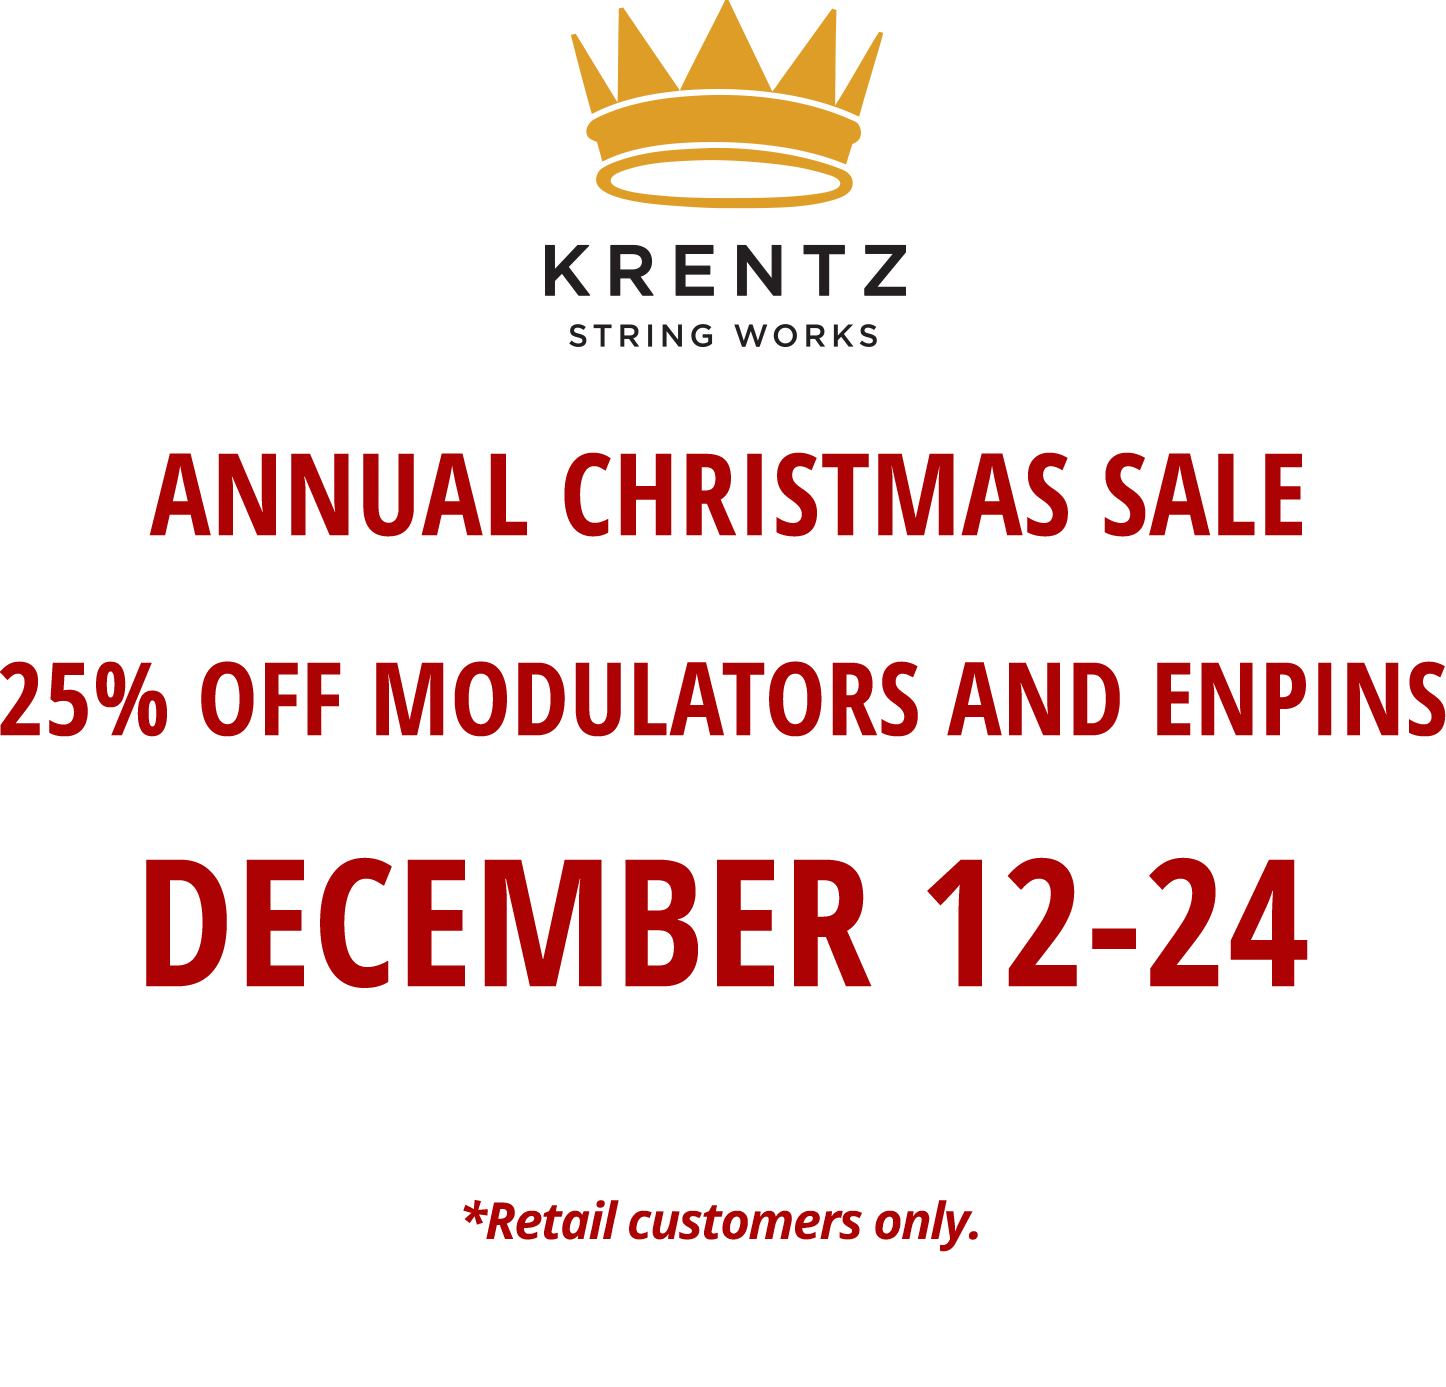 Krentz String Works Christmas Sale Advertisement PNG